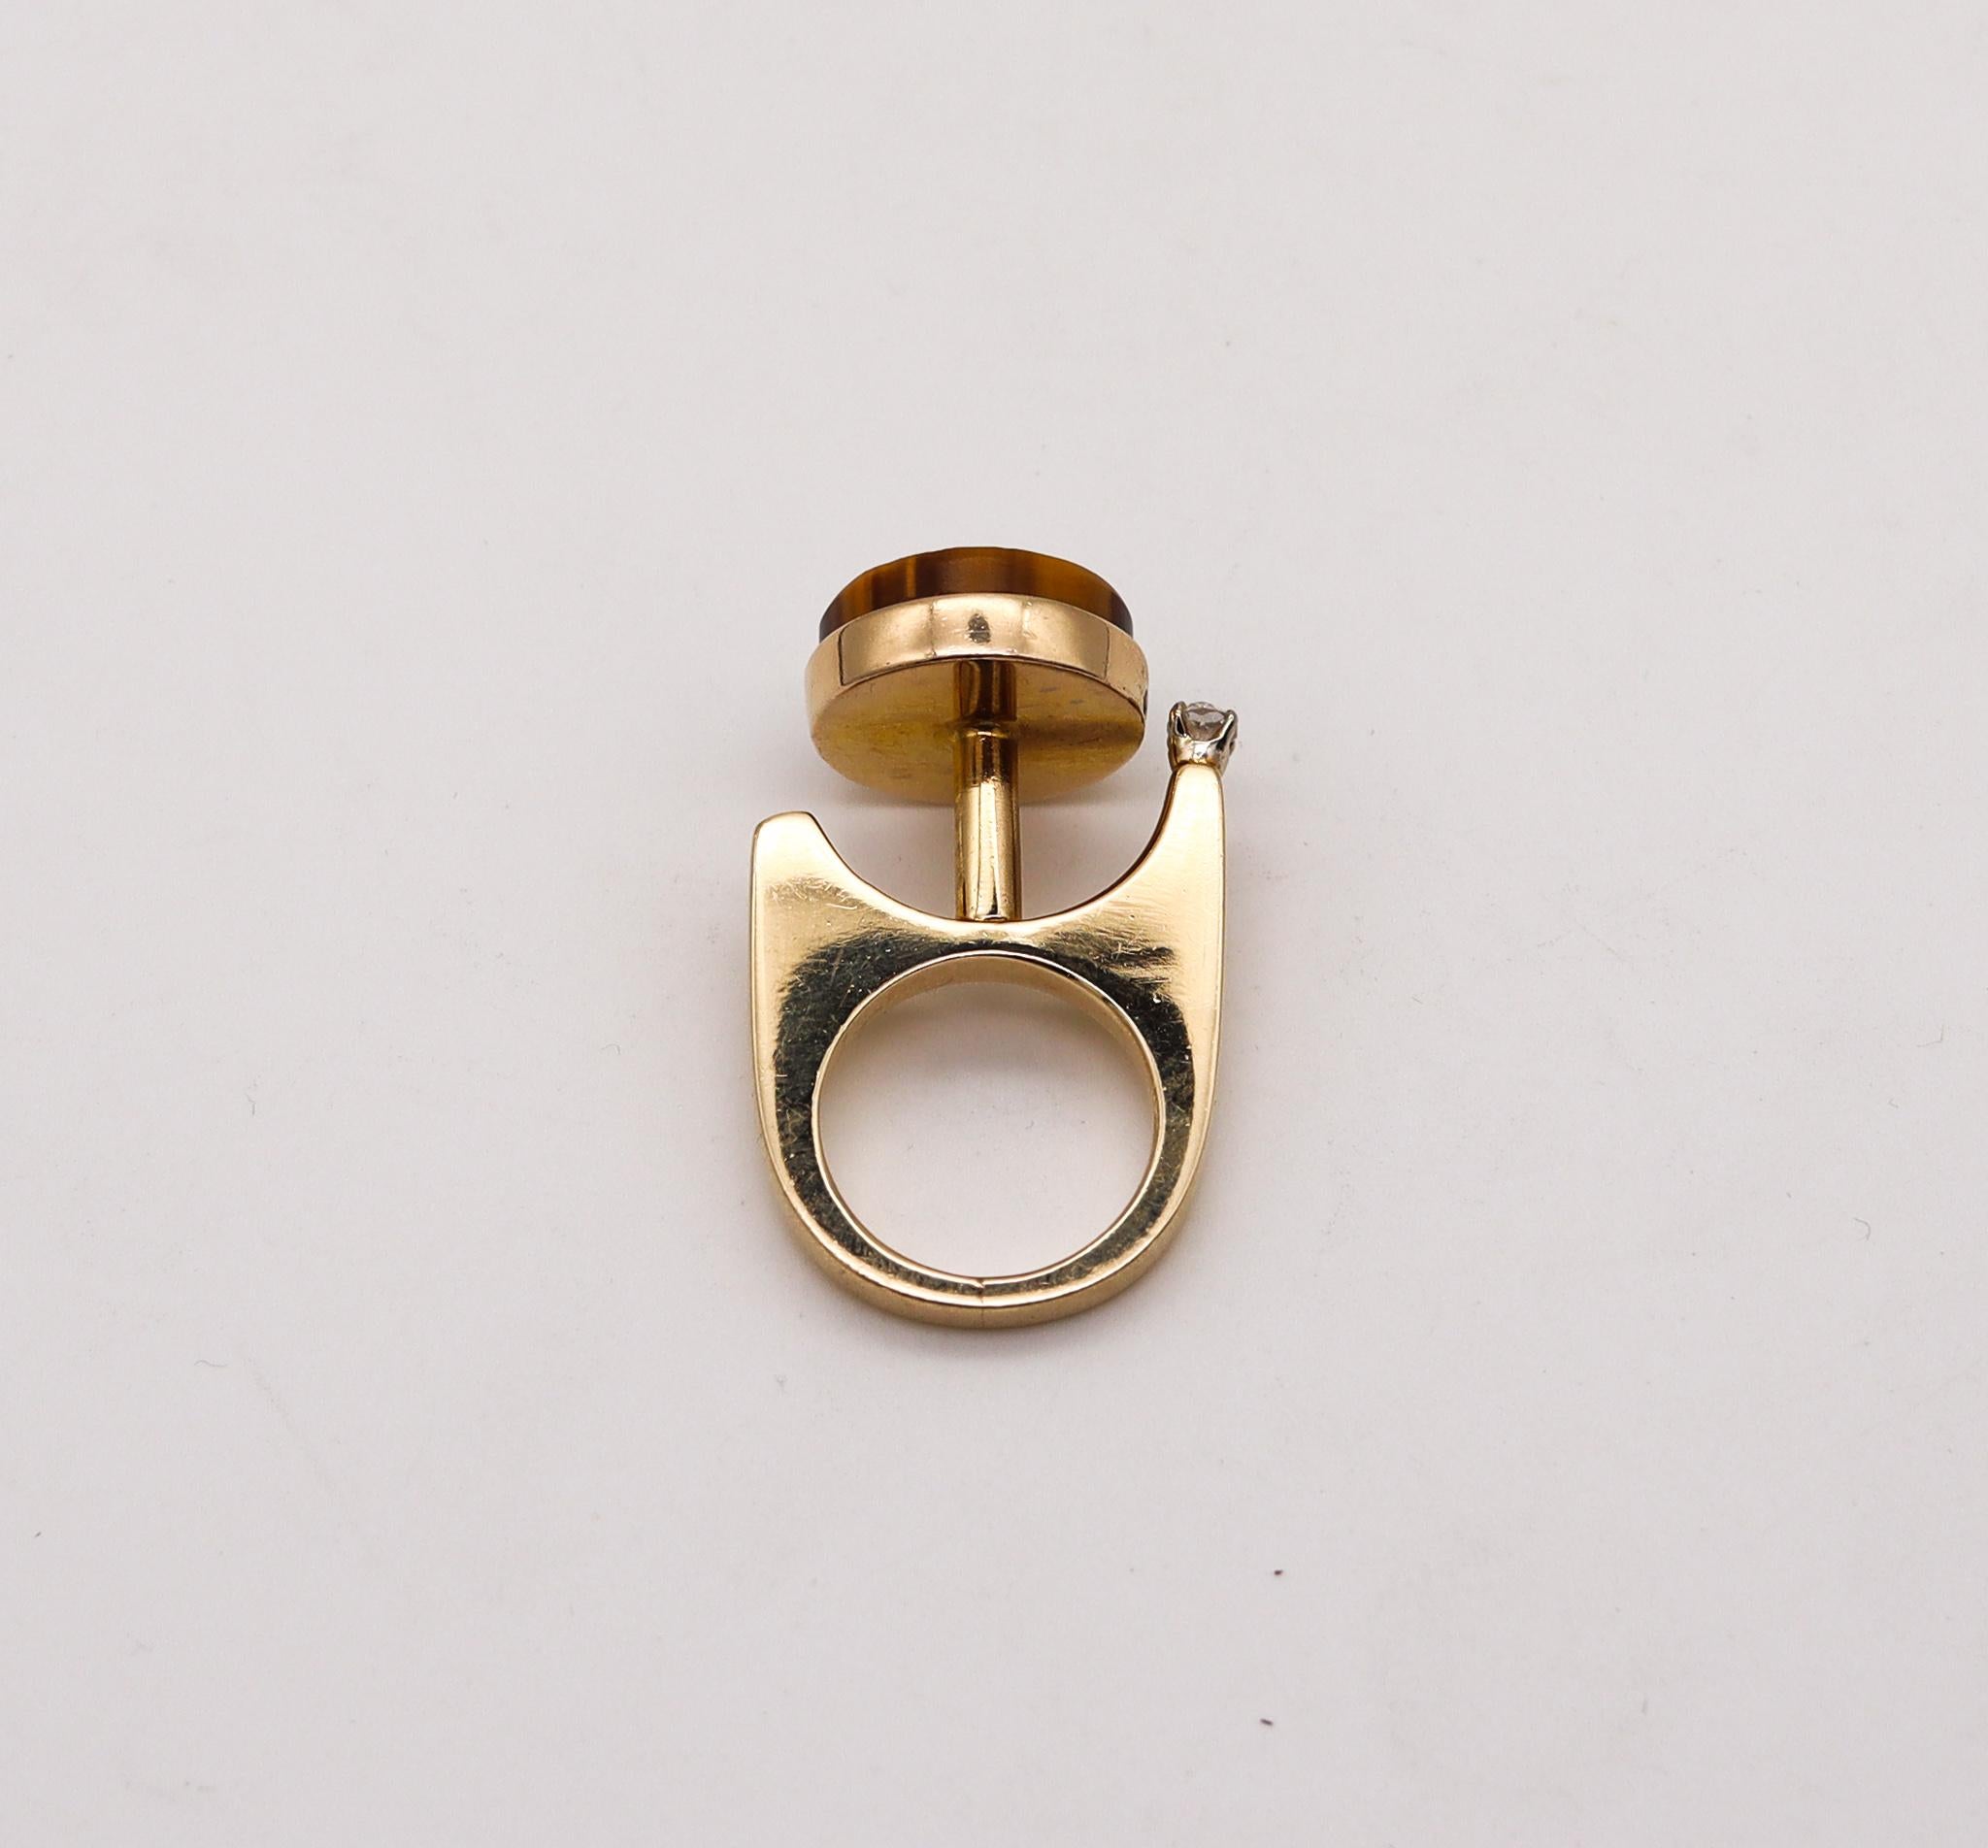 Geometric Retro Modernist 1970 Sculptural Ring in 14kt Gold with Tiger Quartz For Sale 3